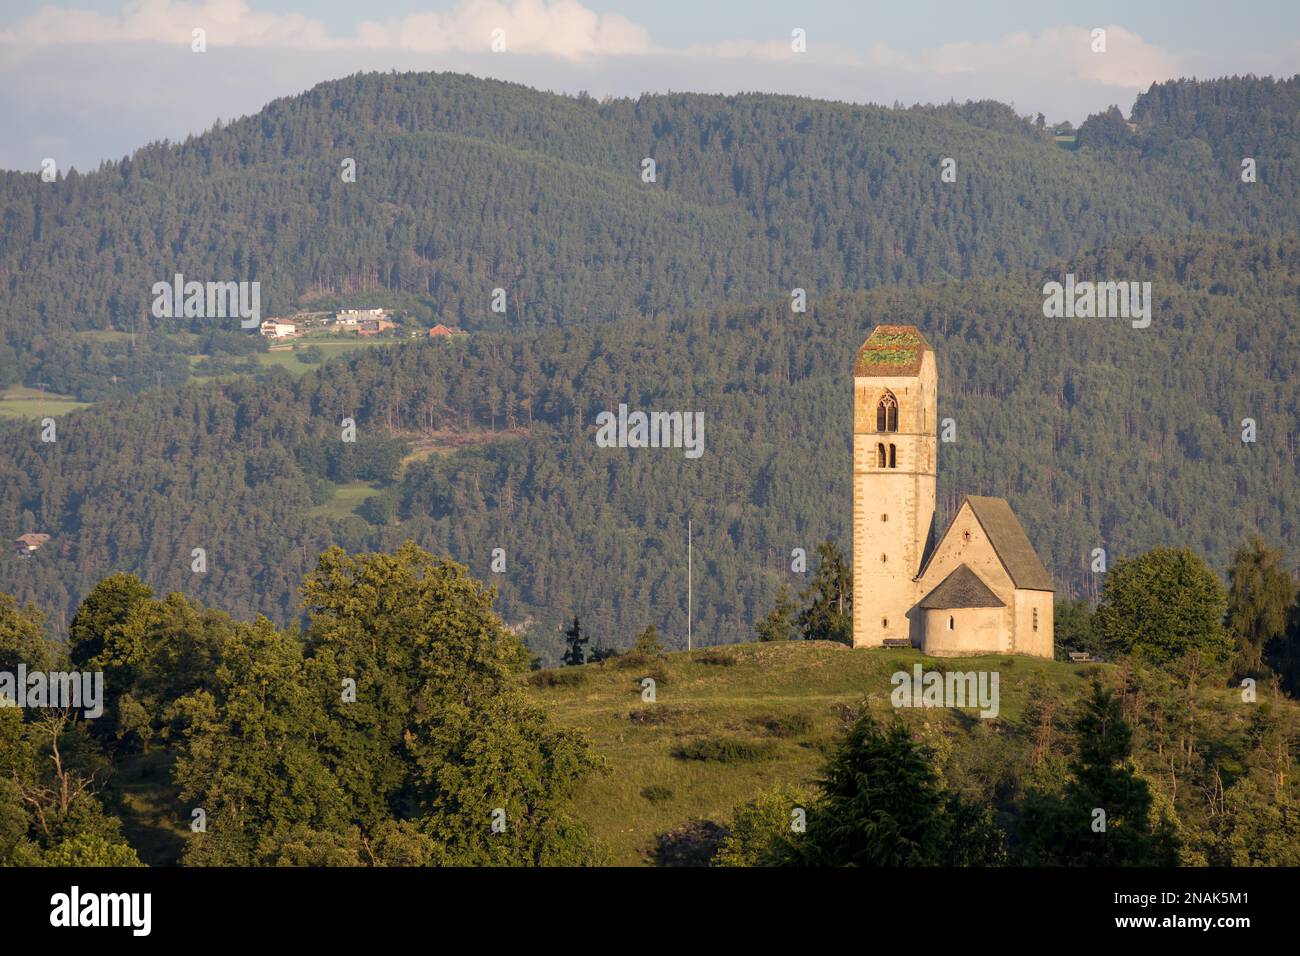 FIE ALLO SCILIAR, SOUTH TYROL/ITALY - AUGUST 8 : View of San Pietro In Colle church, Fie allo Sciliar Trentino Alto Adigio, South Tyrol, Italy on Stock Photo